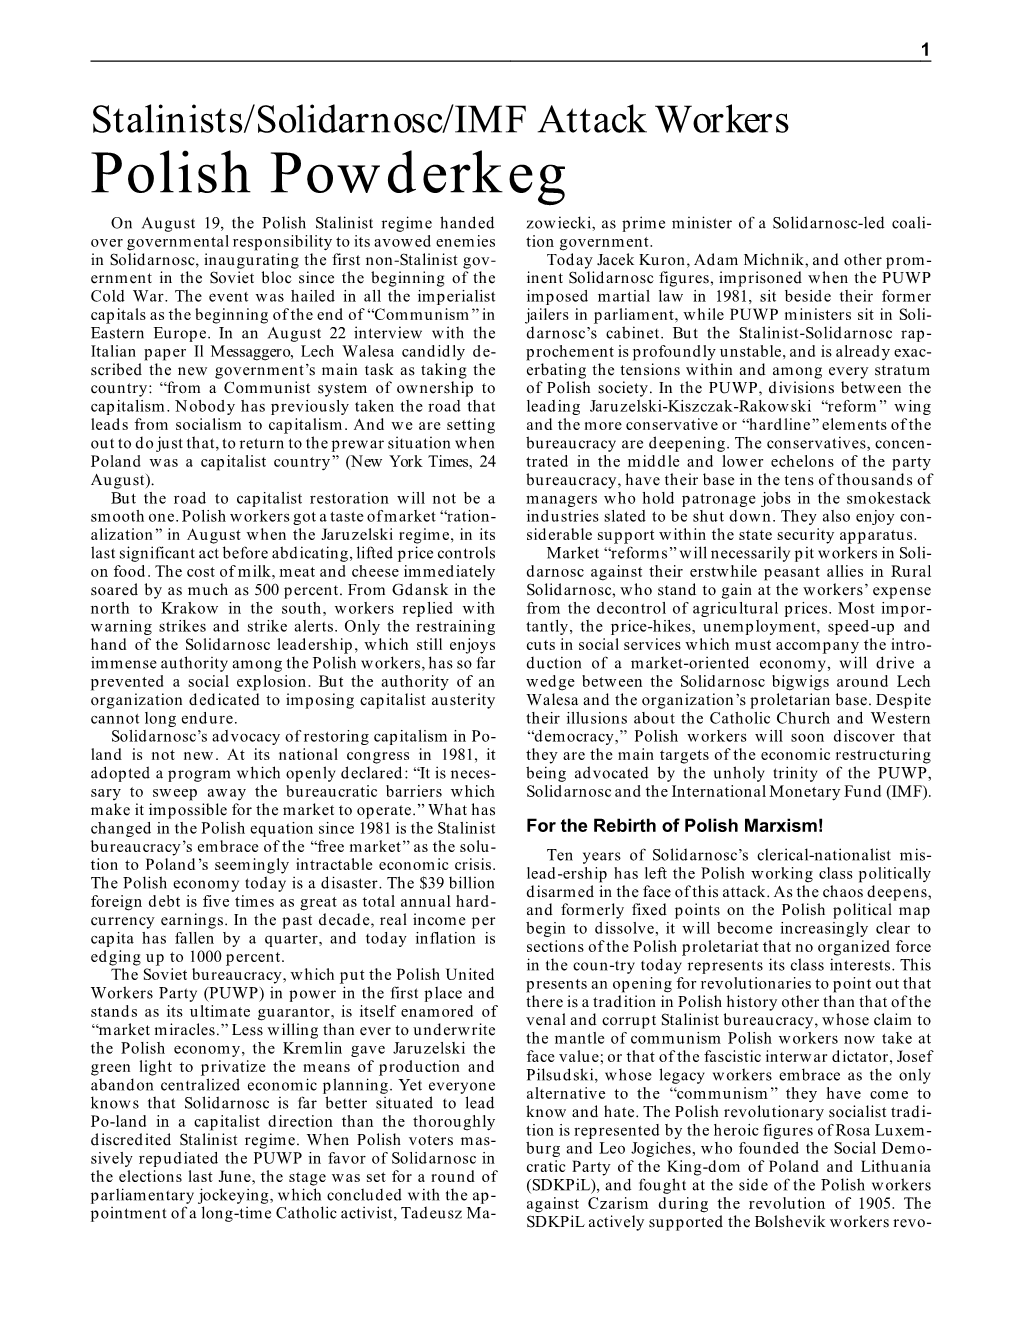 Stalinists/Solidarnosc/IMF Attack Workers Polish Powderkeg